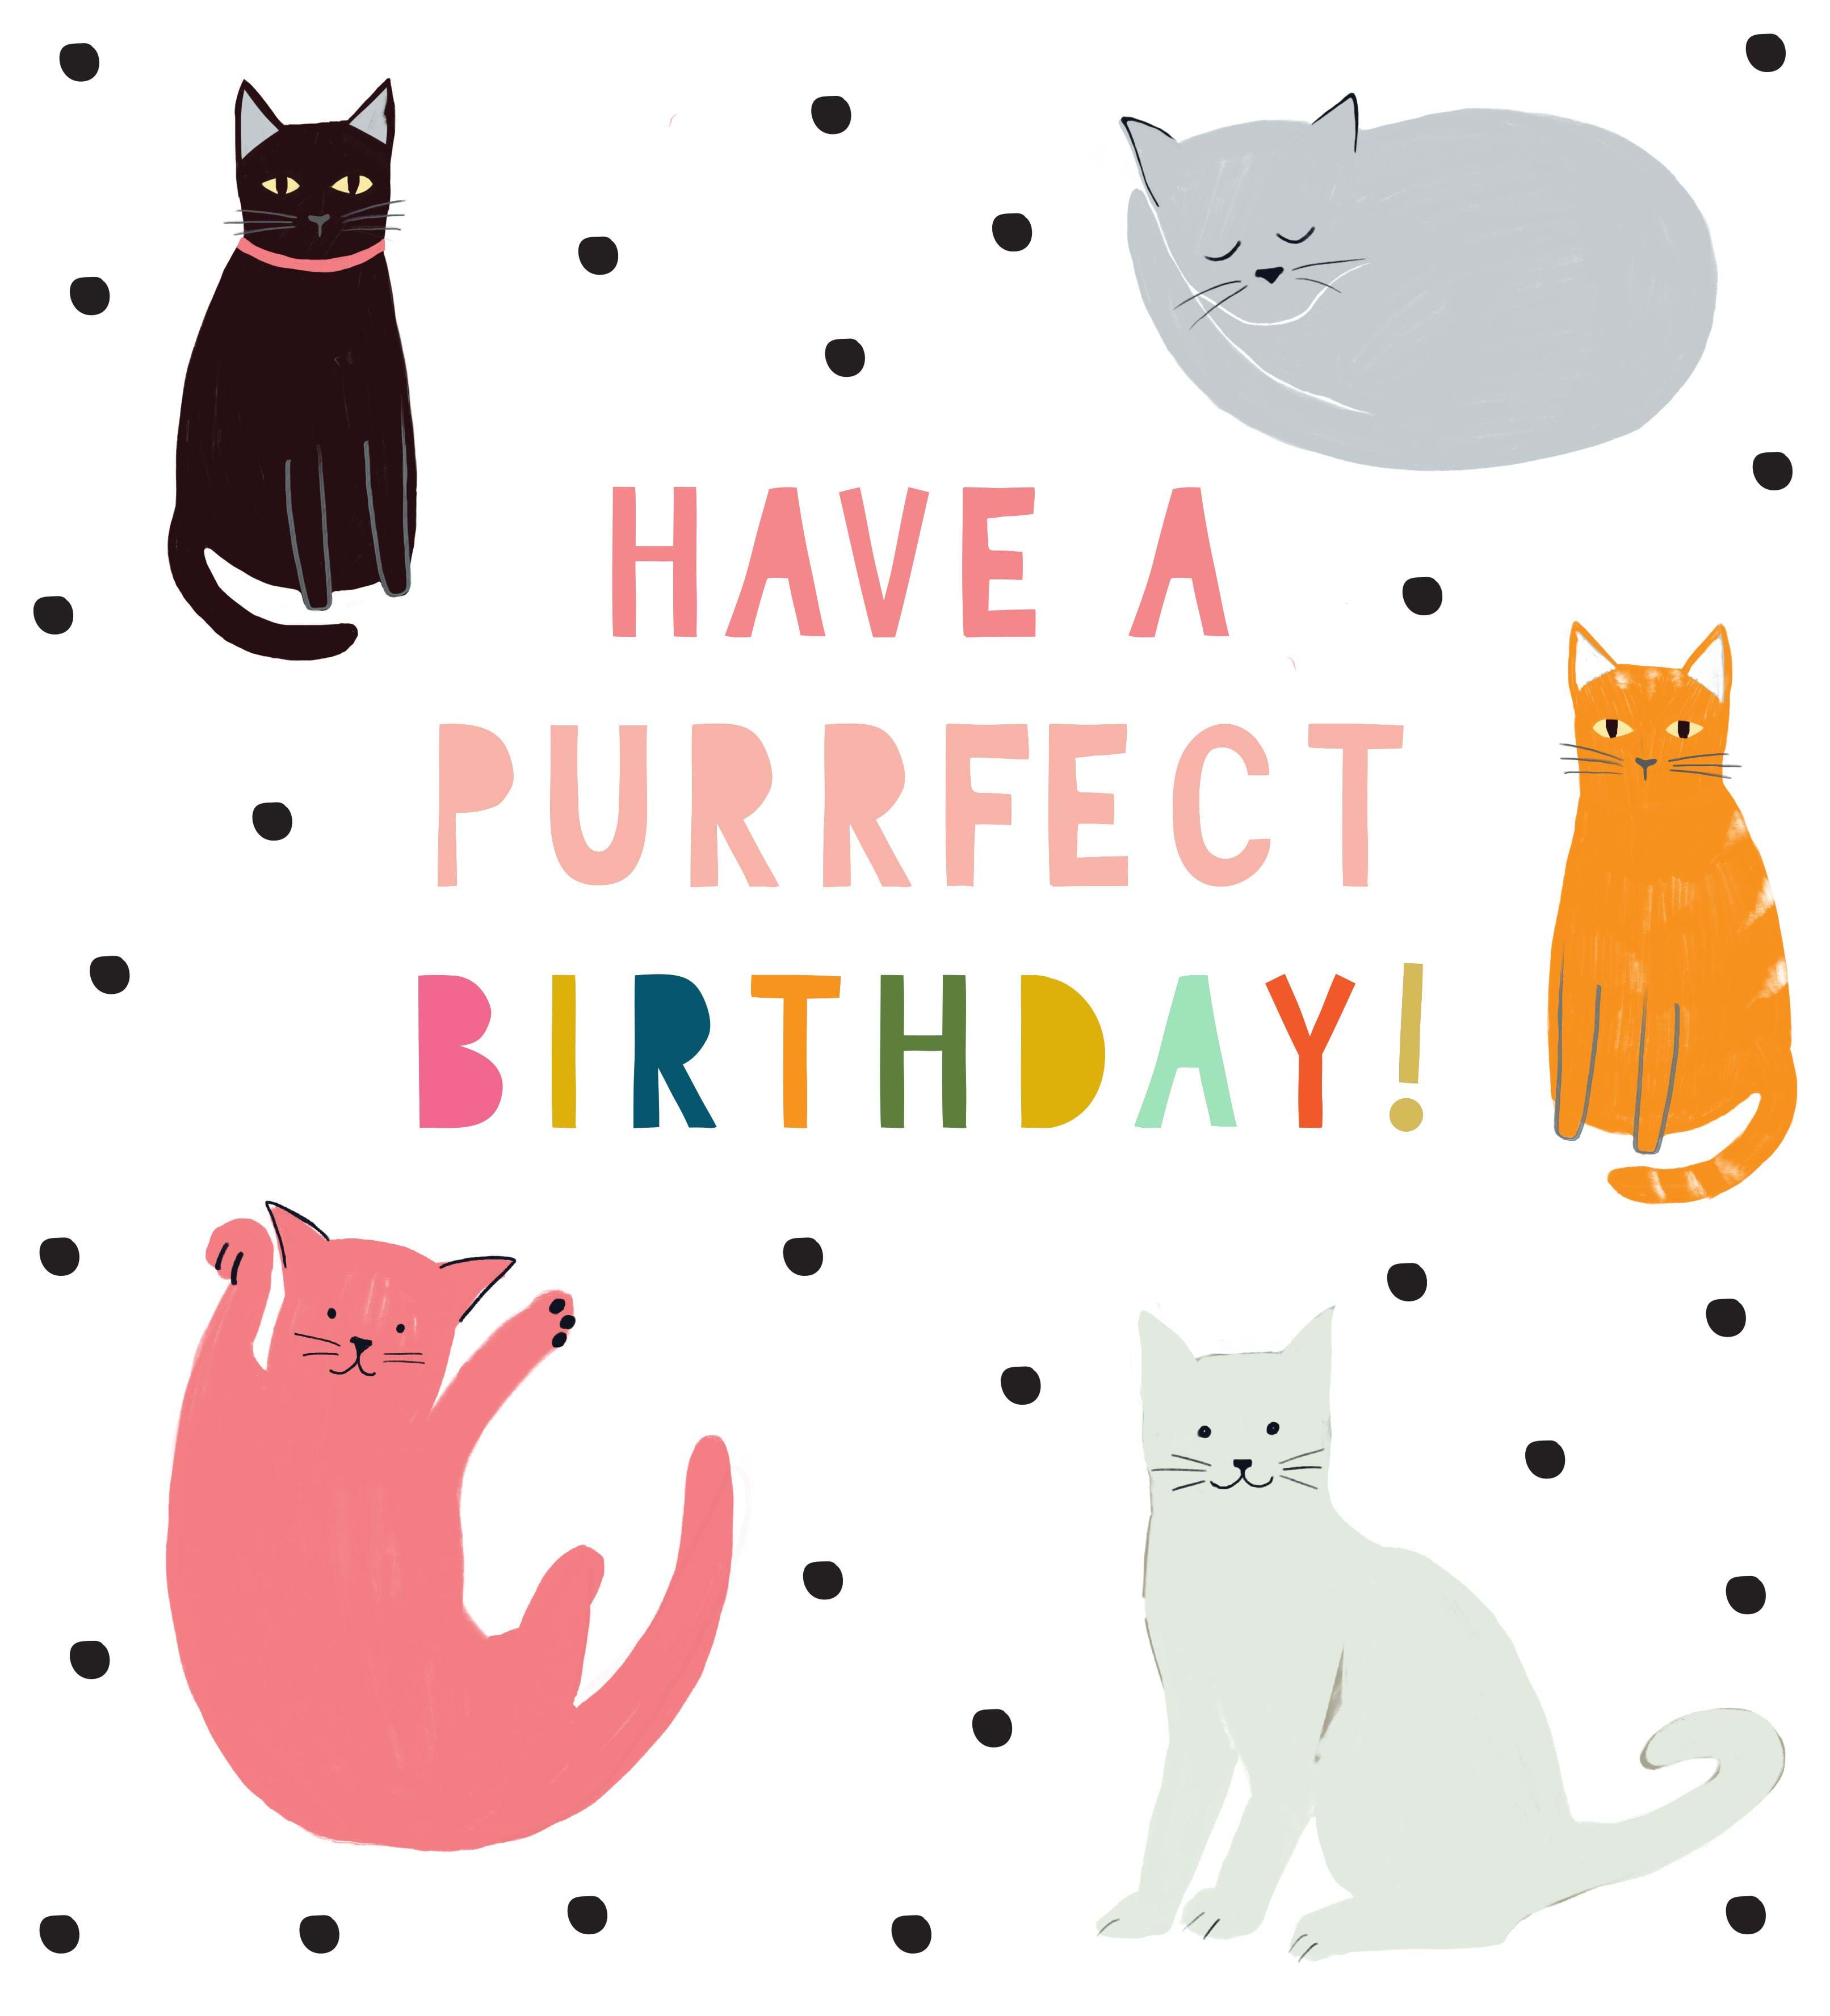 Purrfect Day Birthday Card